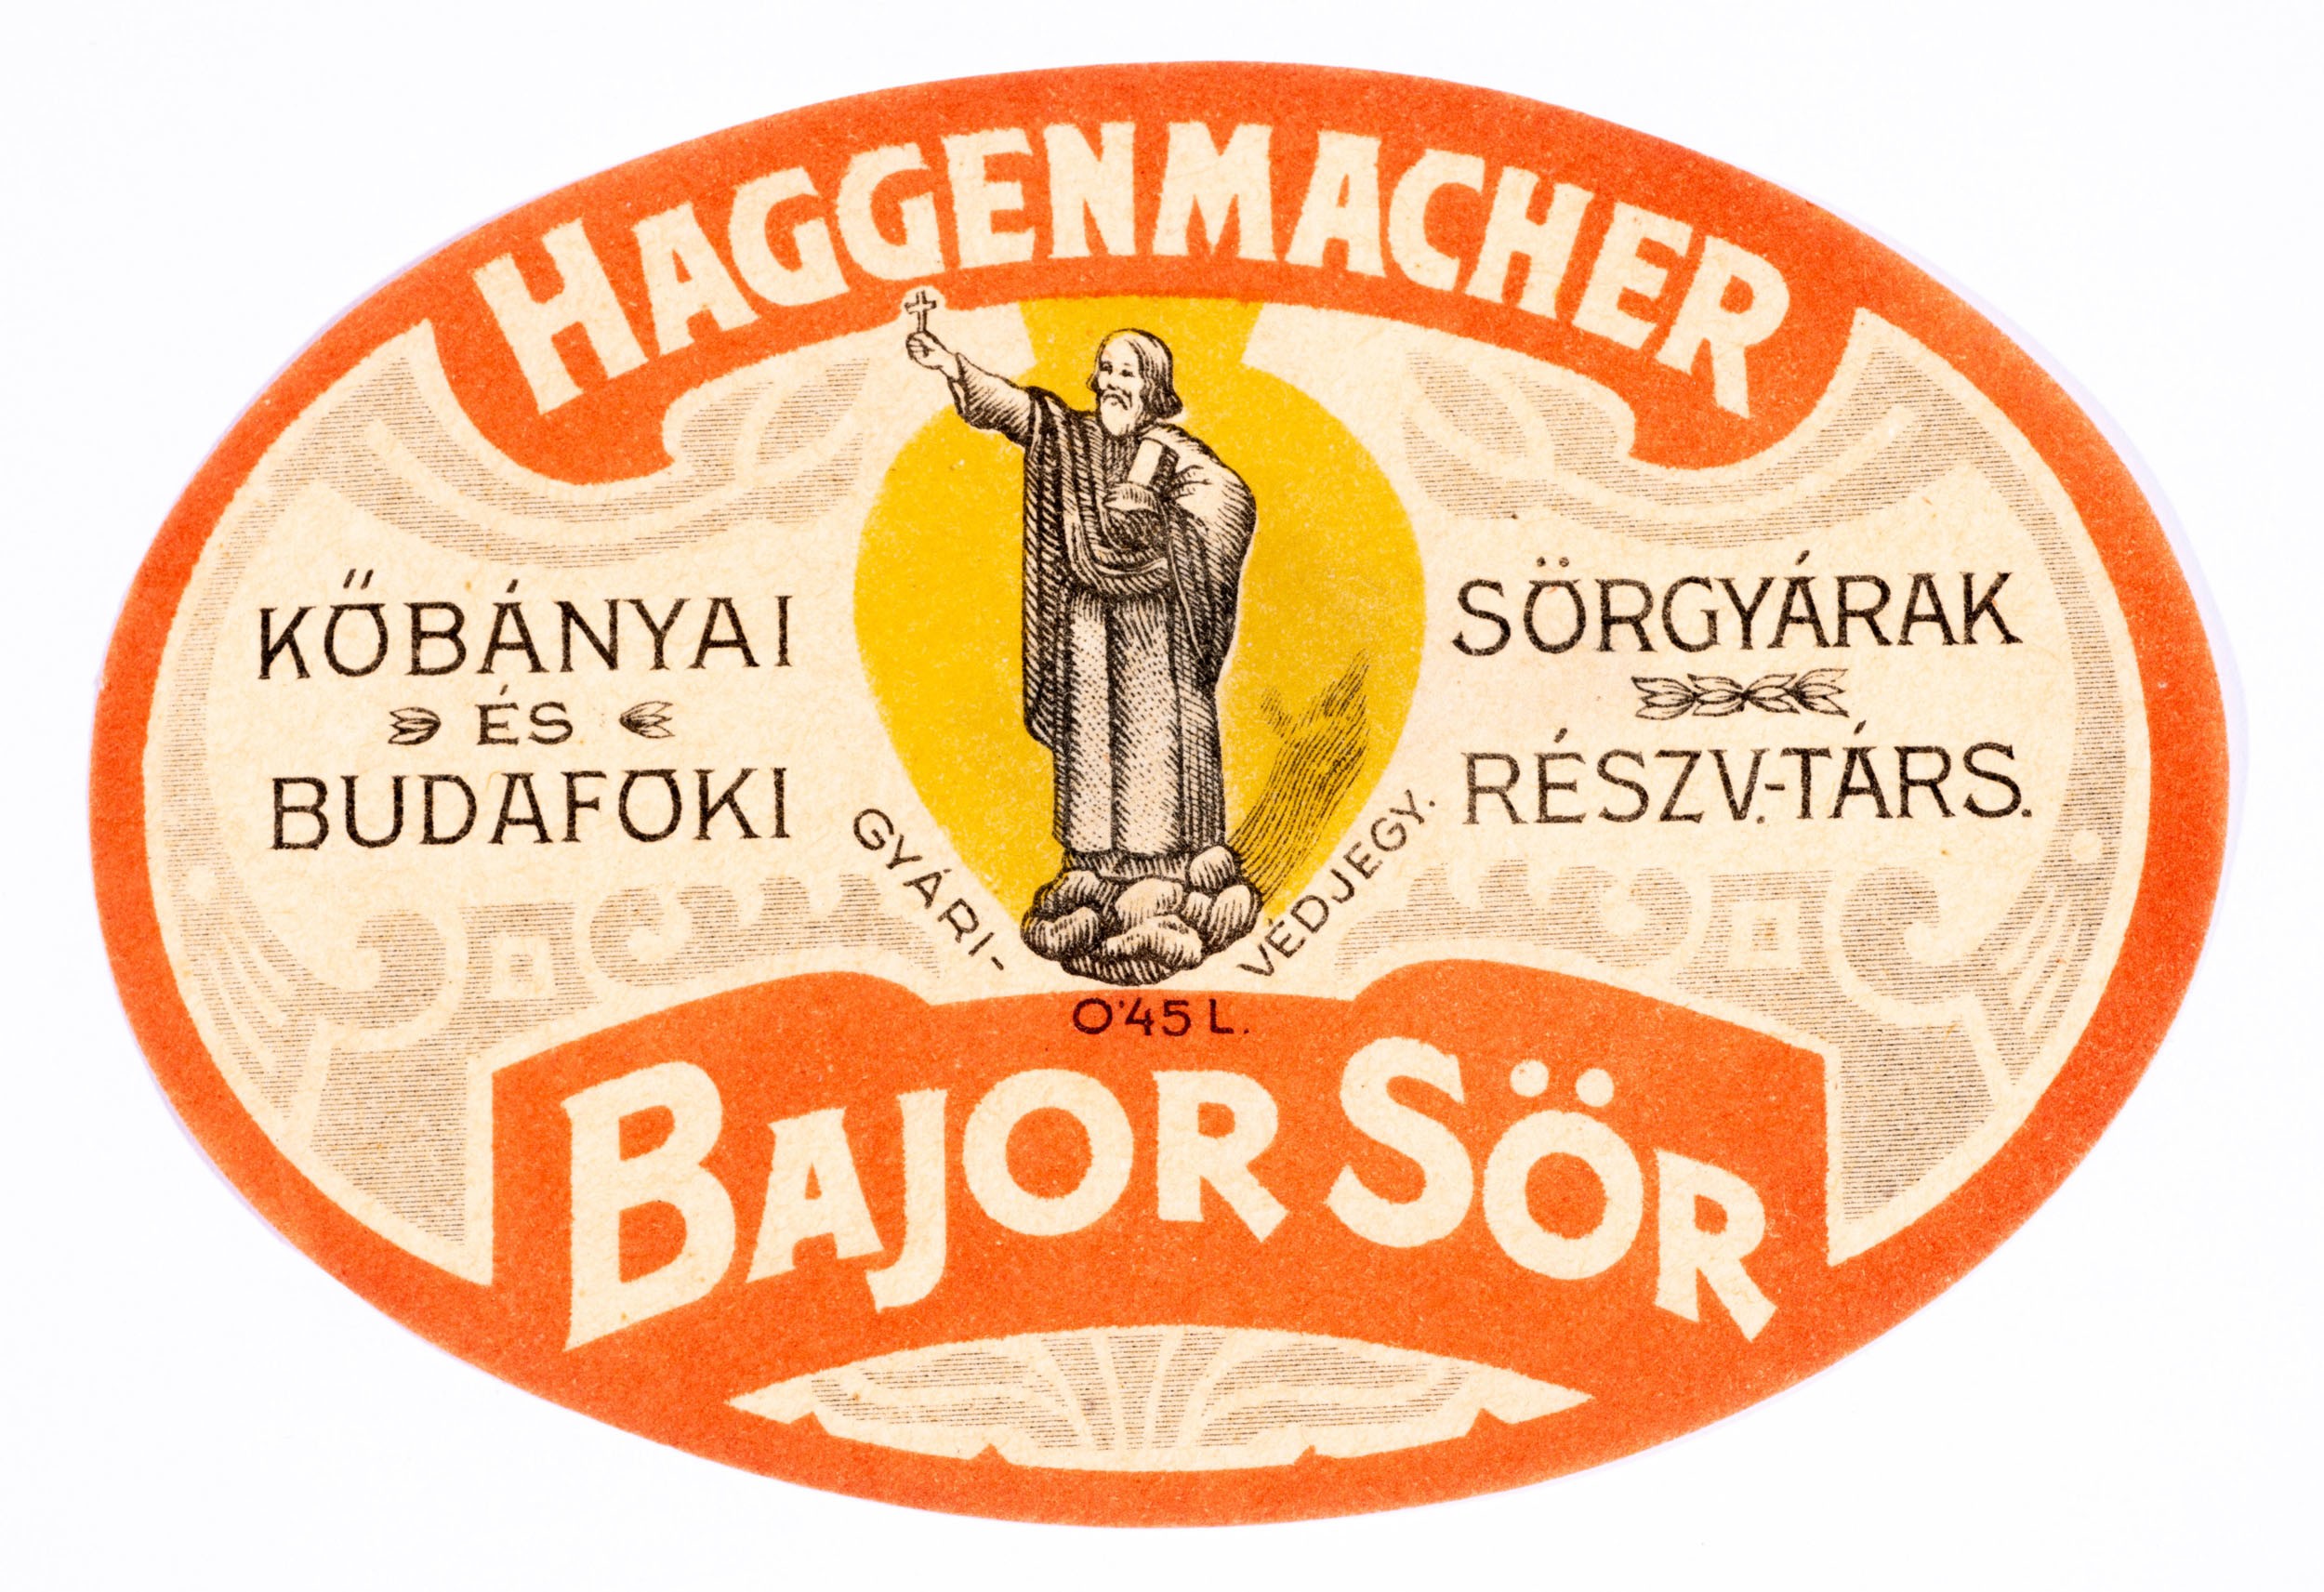 Haggenmacher bajor sör (Söripari Emléktár - Dreher Sörmúzeum CC BY-NC-SA)